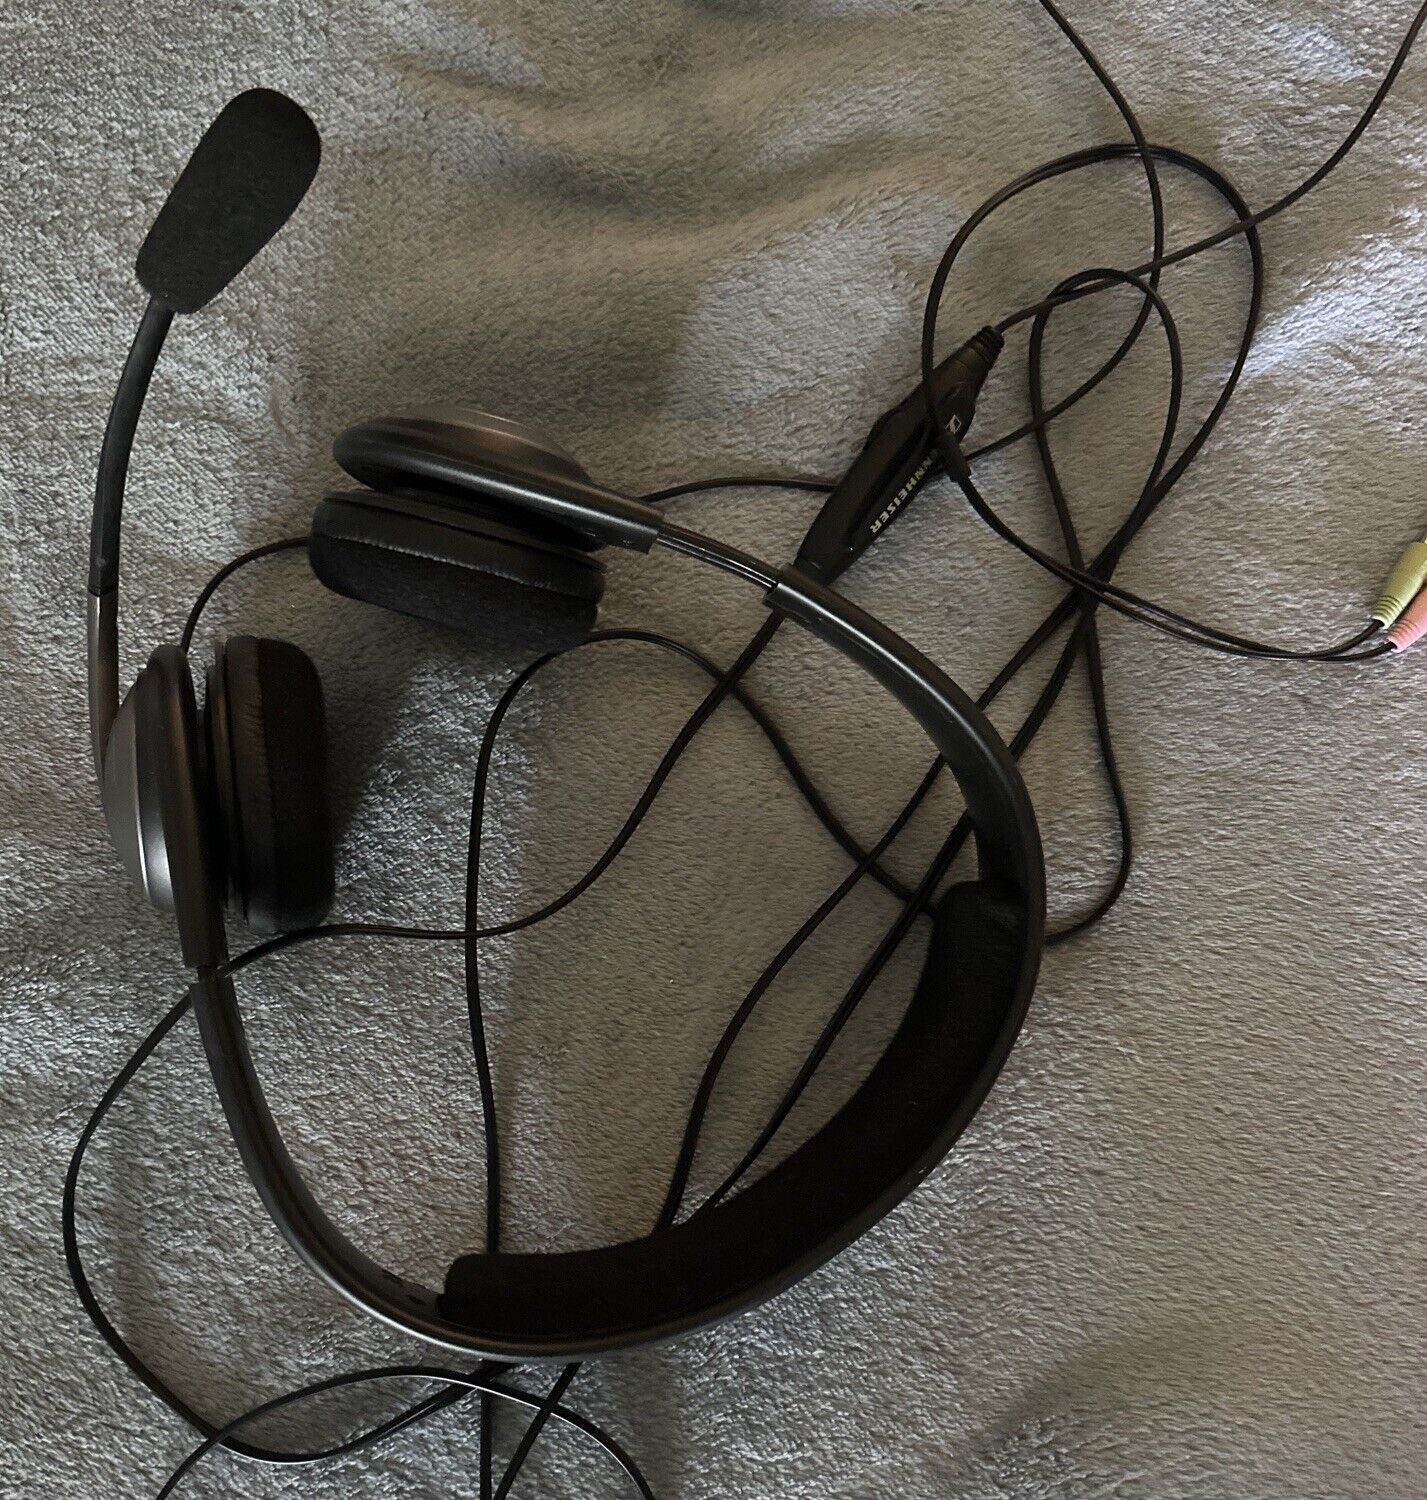 Sennheiser Com PC 151 Binaural Headset W Mic Noise Canceling Headphones Gaming